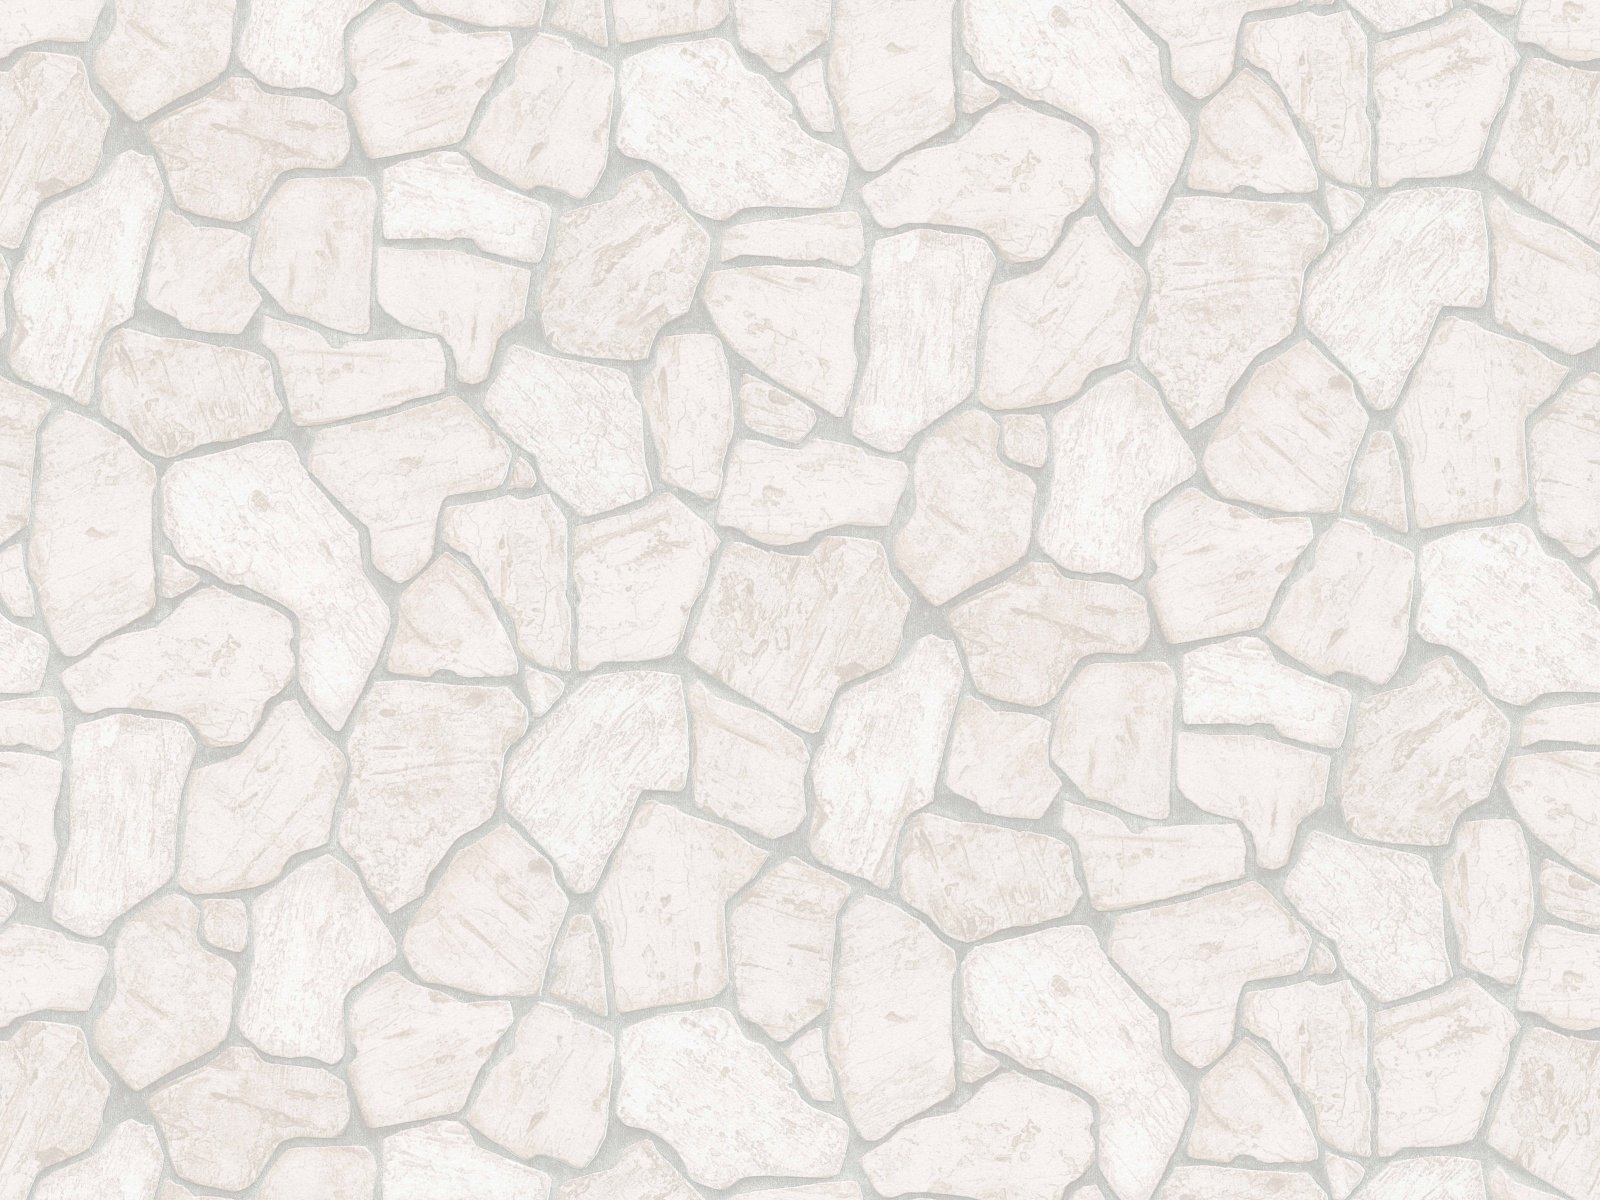 Vliesové tapety so zamatovo hladkými kameňmi s organicky dokonalým tvarom, ER-601546